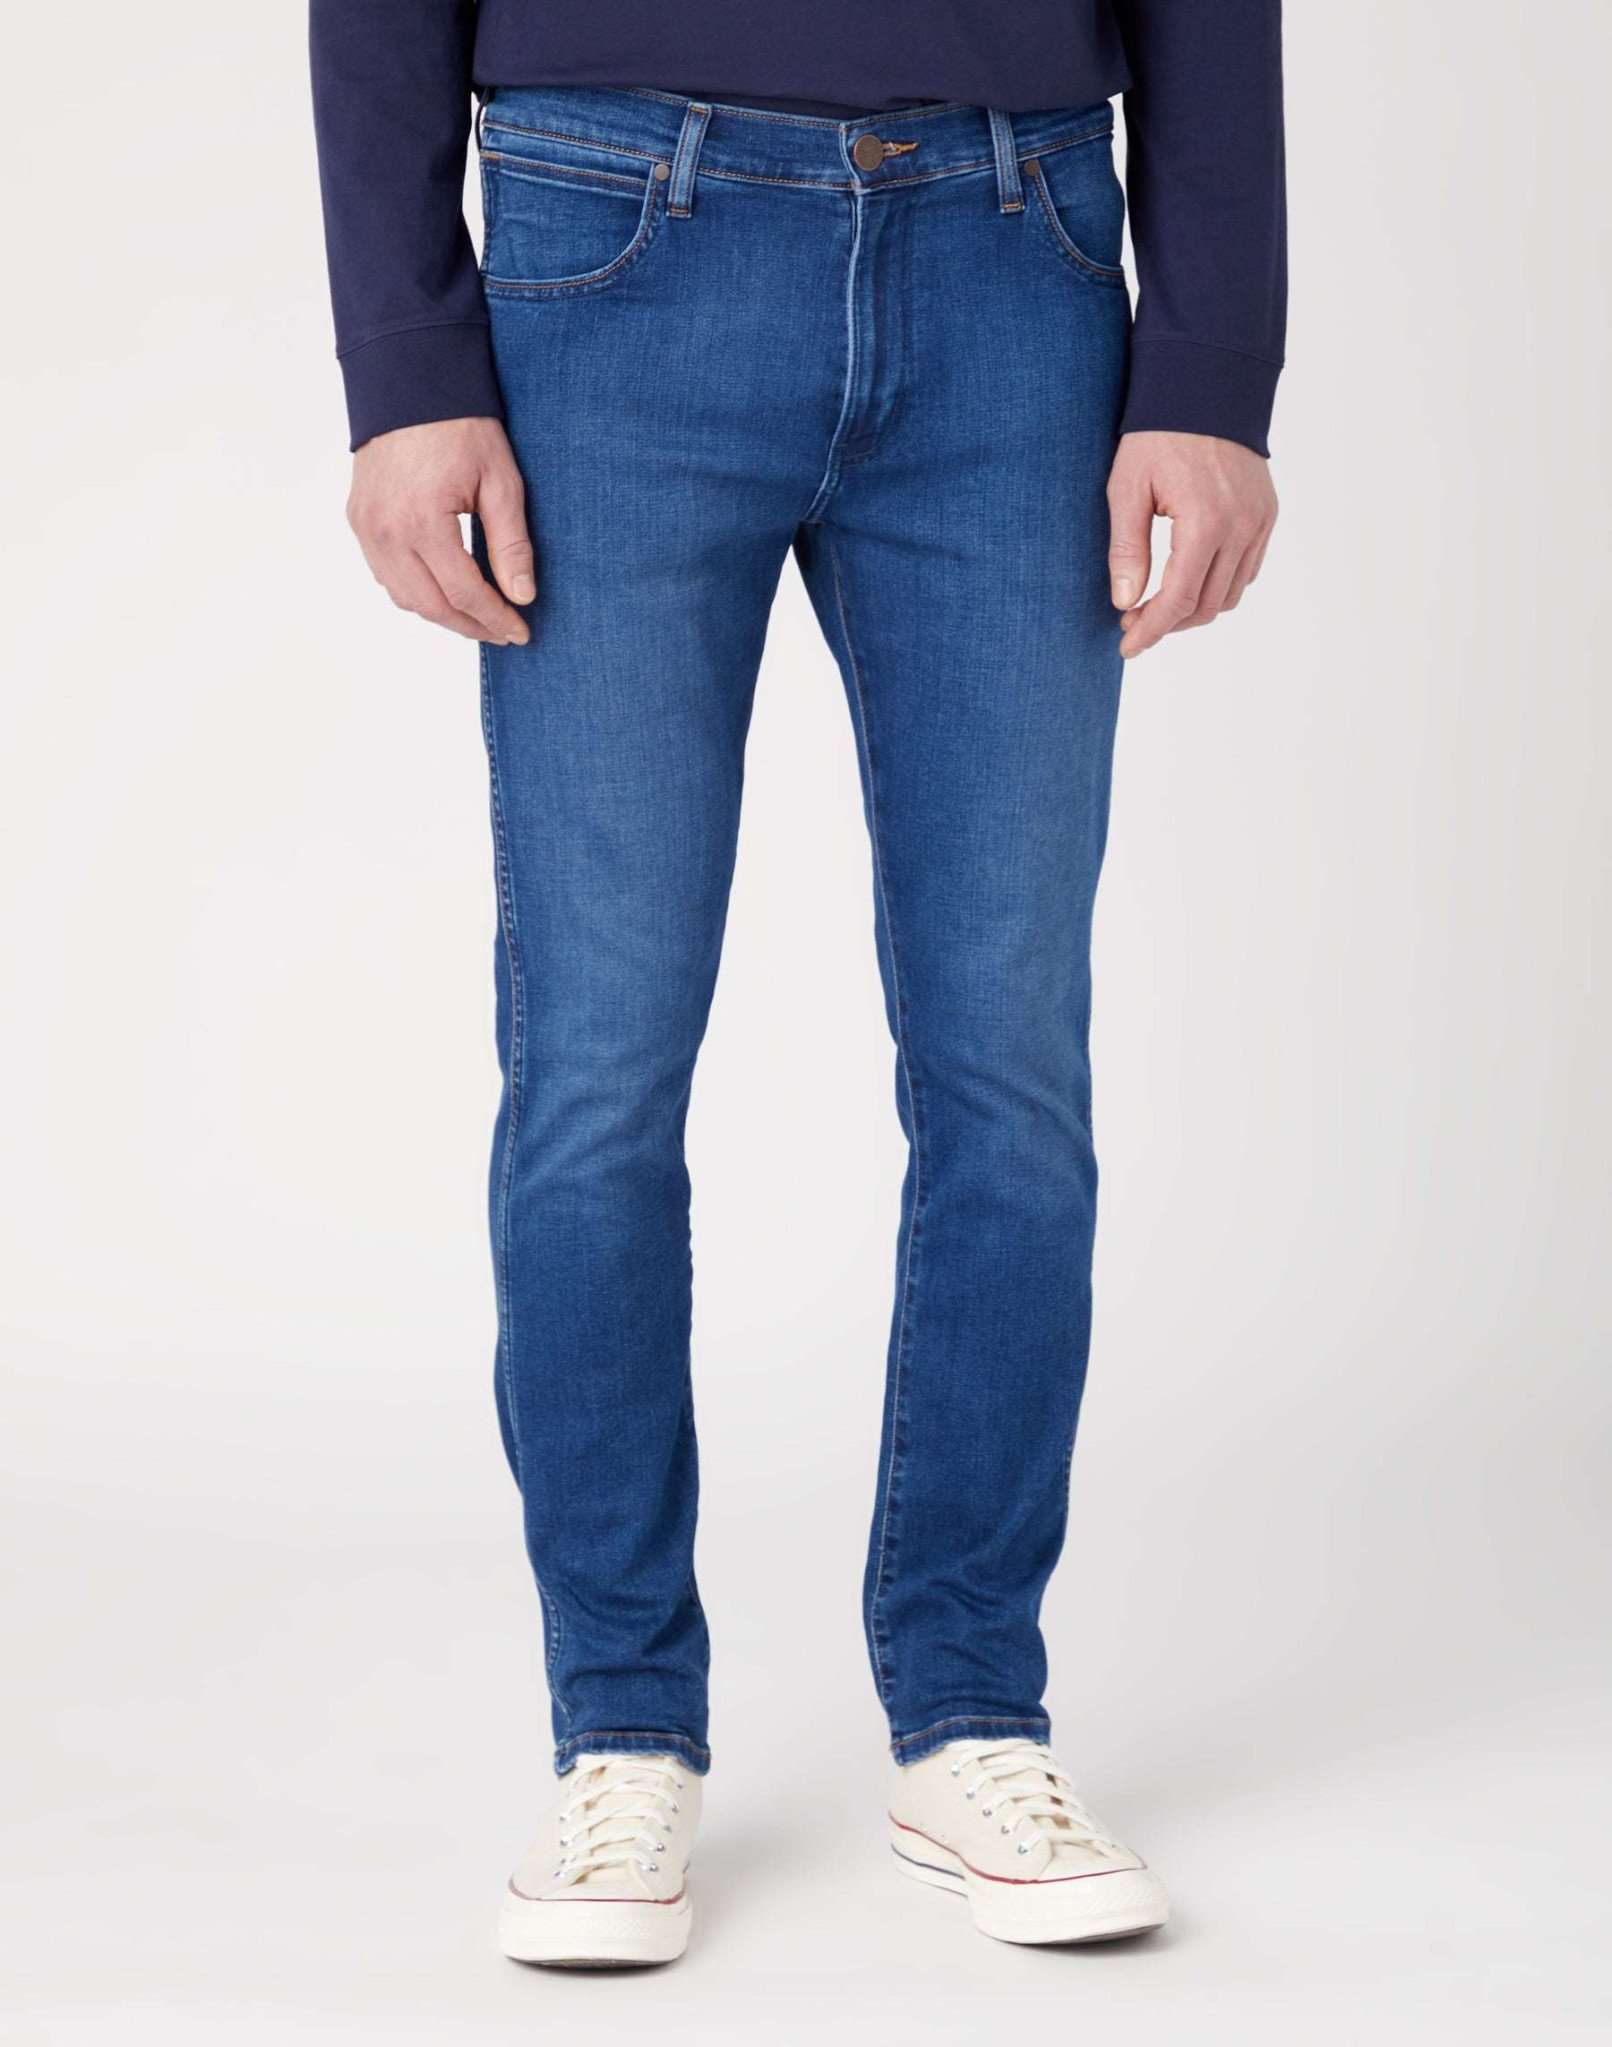 Larston in Orion Jeans Wrangler   